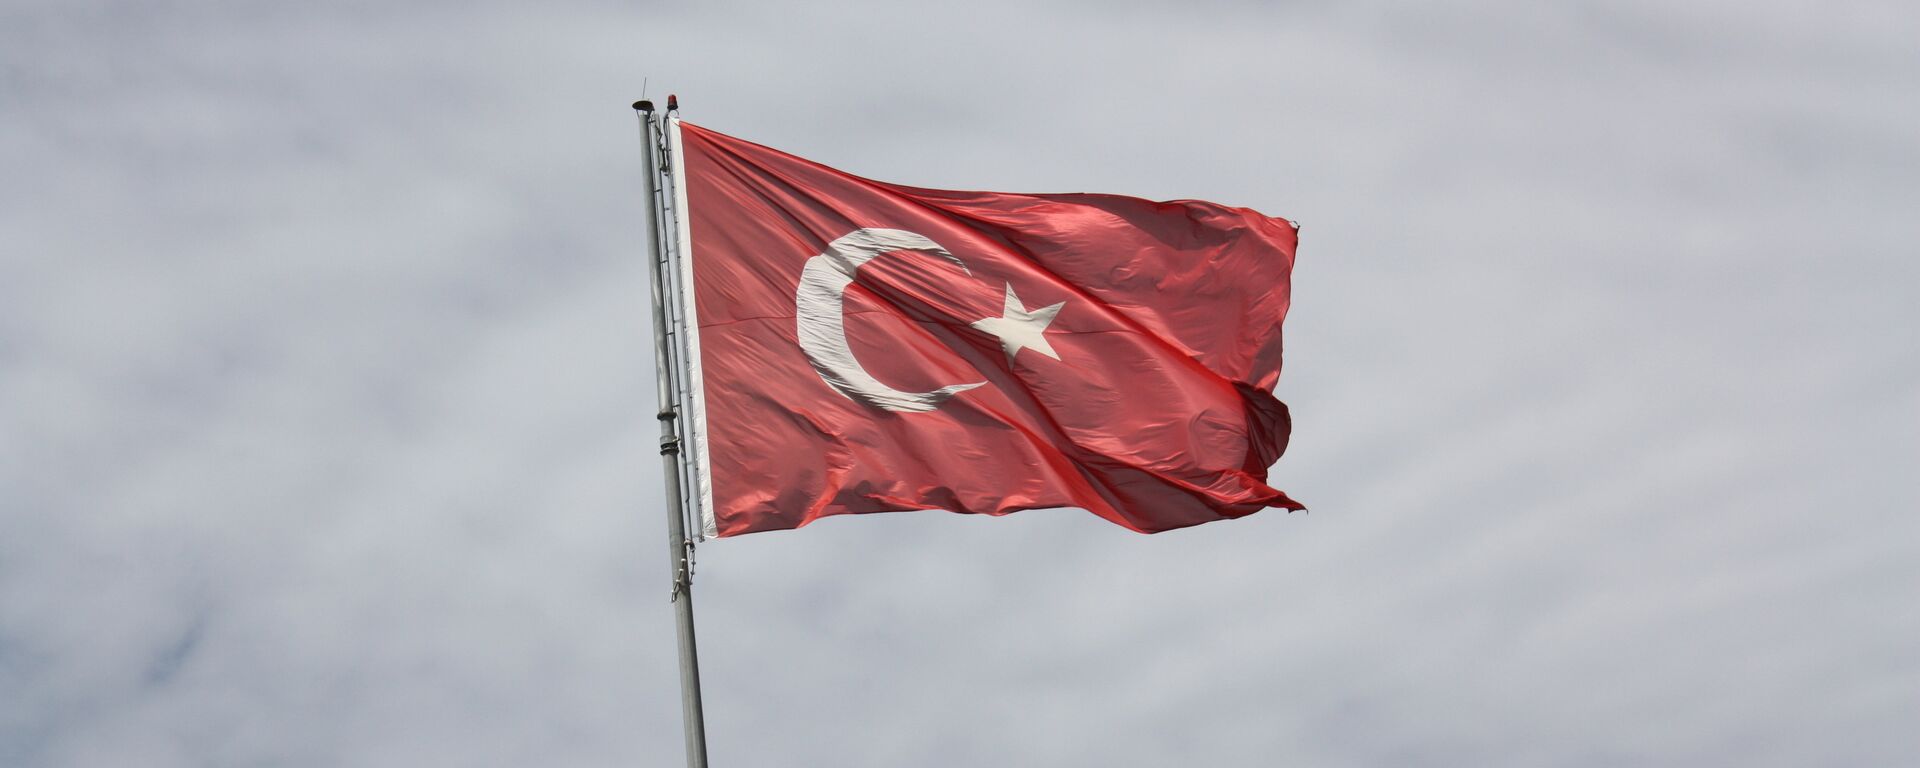 Bandera de Turquía - Sputnik Mundo, 1920, 04.04.2021